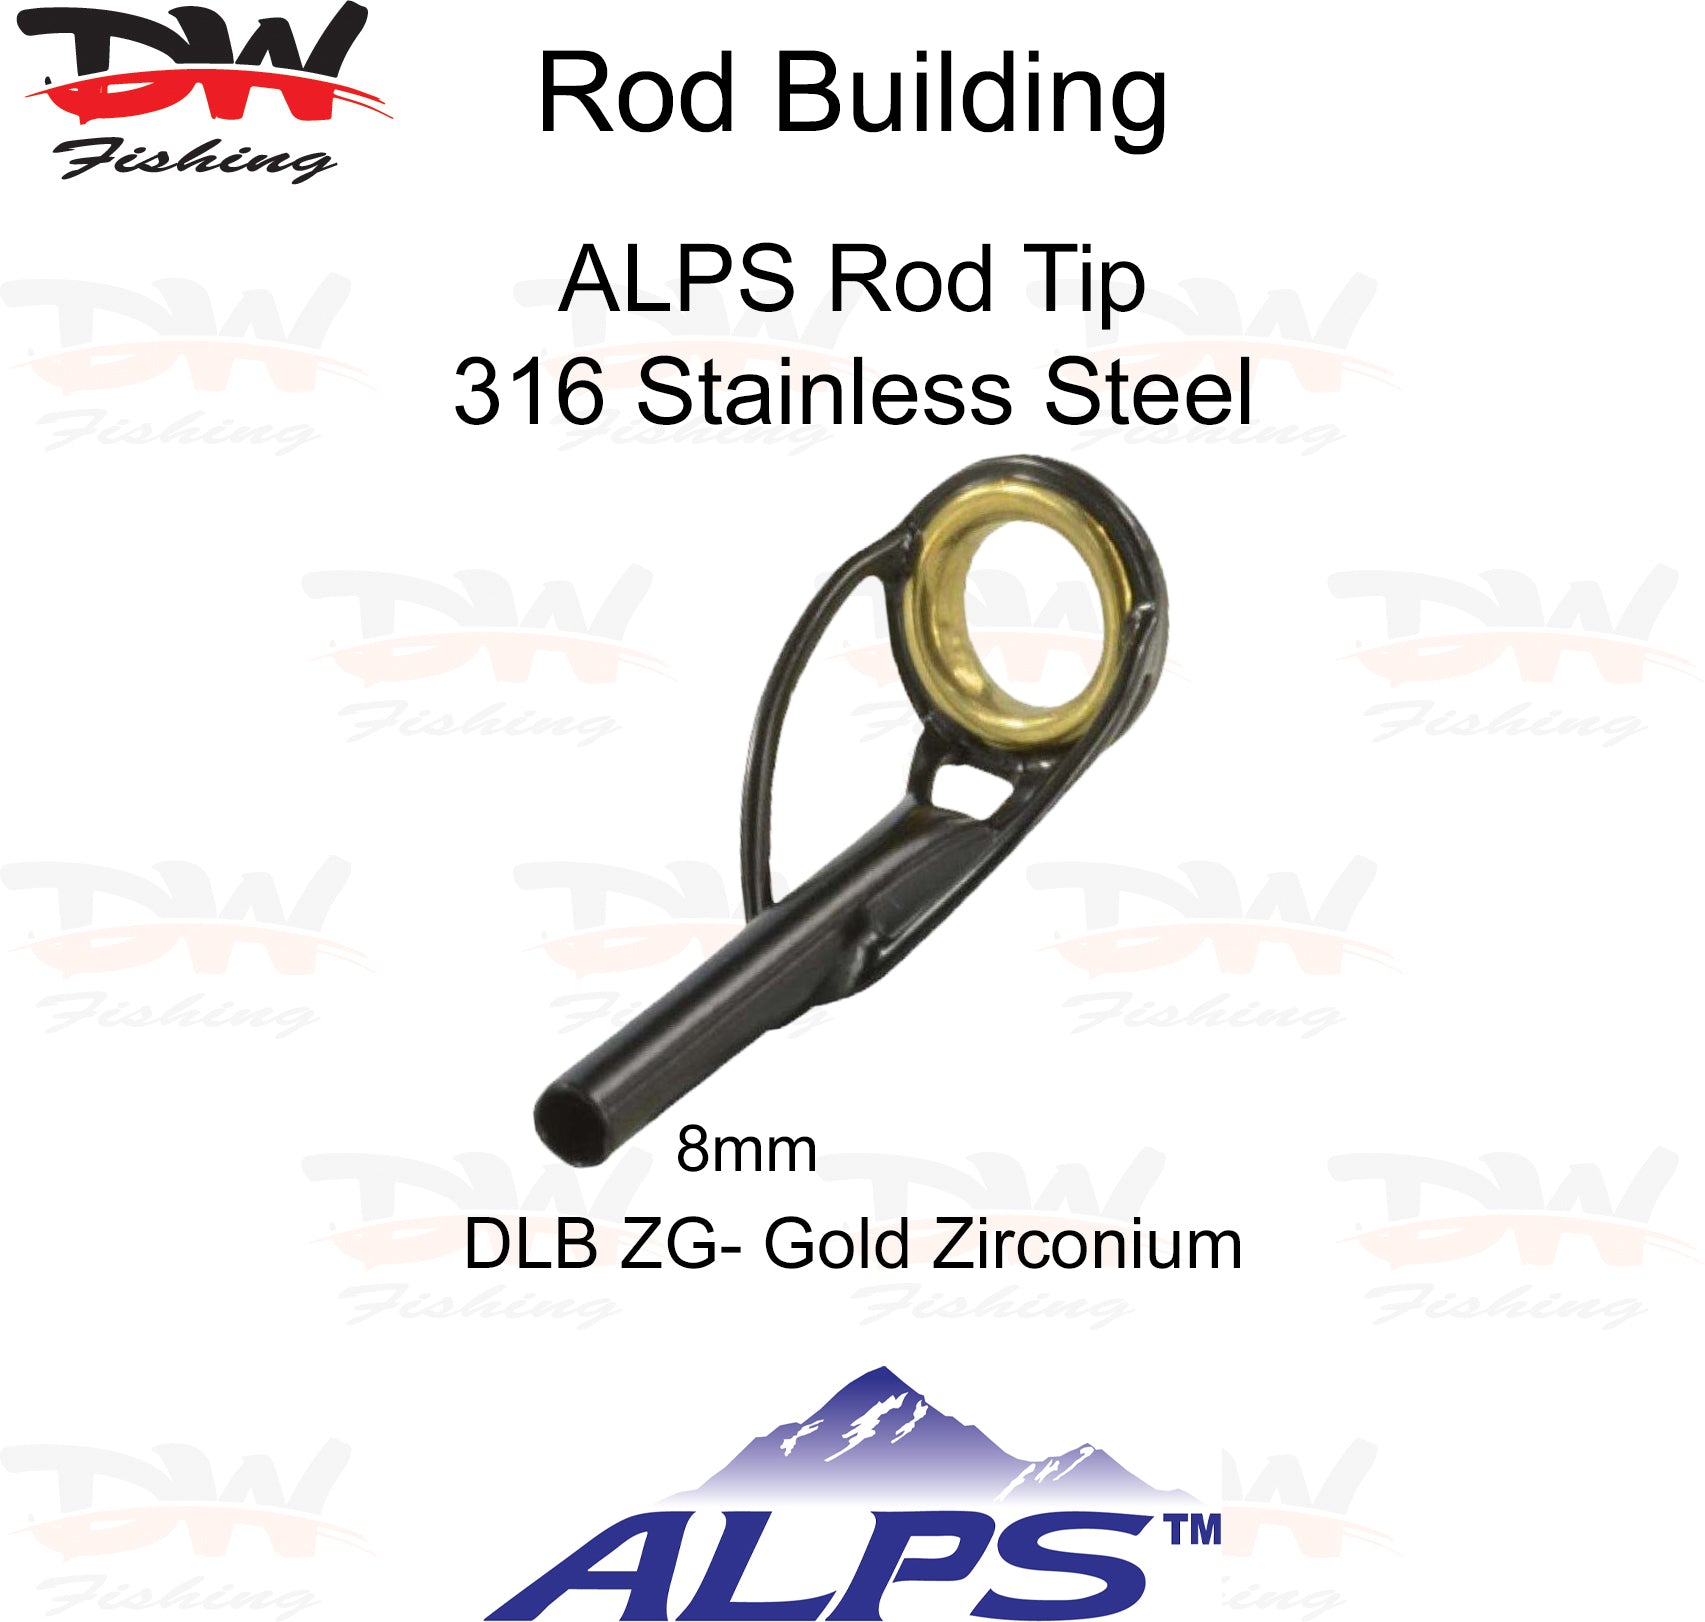 ALPS rod tip DLB-ZG Black frame with gold zirconium ring size 8 rod tip